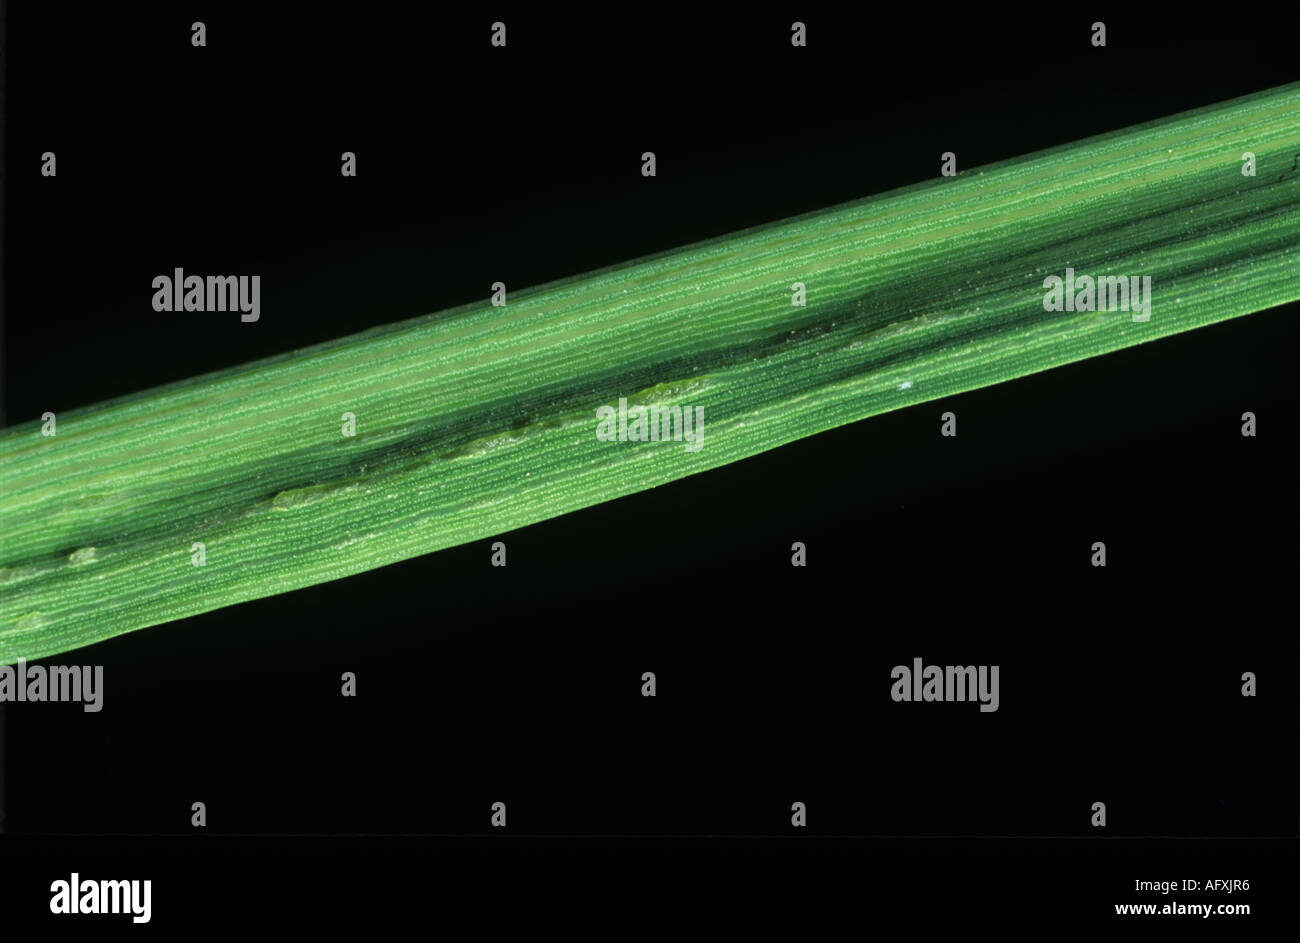 Zerlumpten Stunt Virus Gallen an Reis Blatt durch geschwollenen Phloem Zellen verursacht Stockfoto